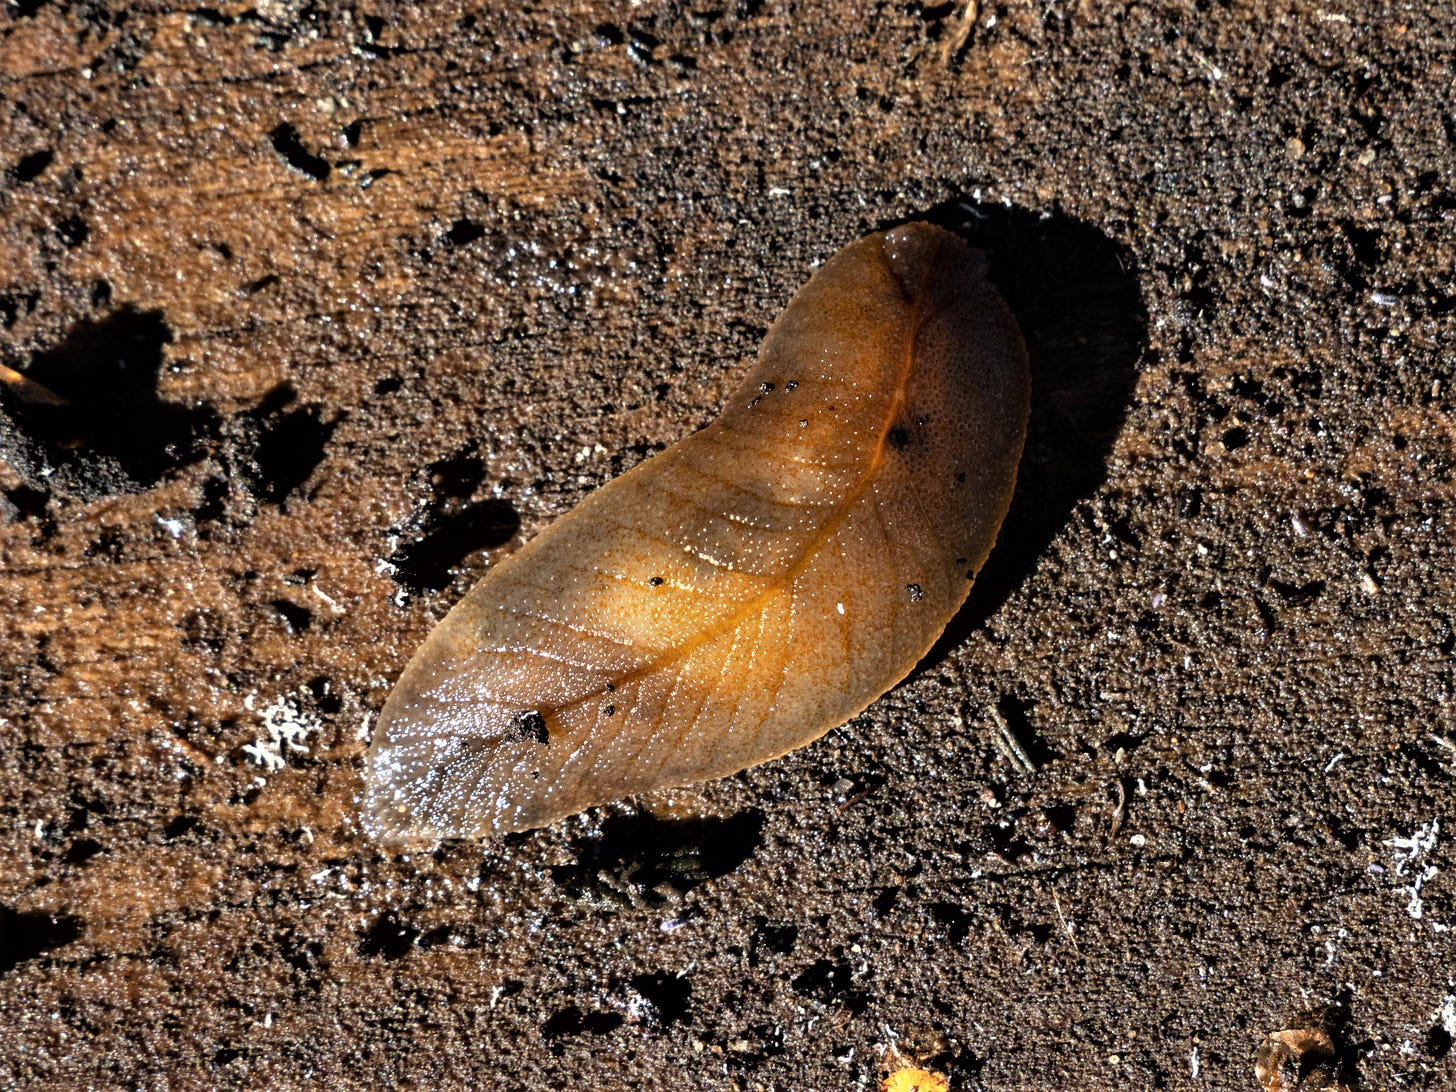 Leaf-veined slug (Athoracophoridae, native) on muddy surface